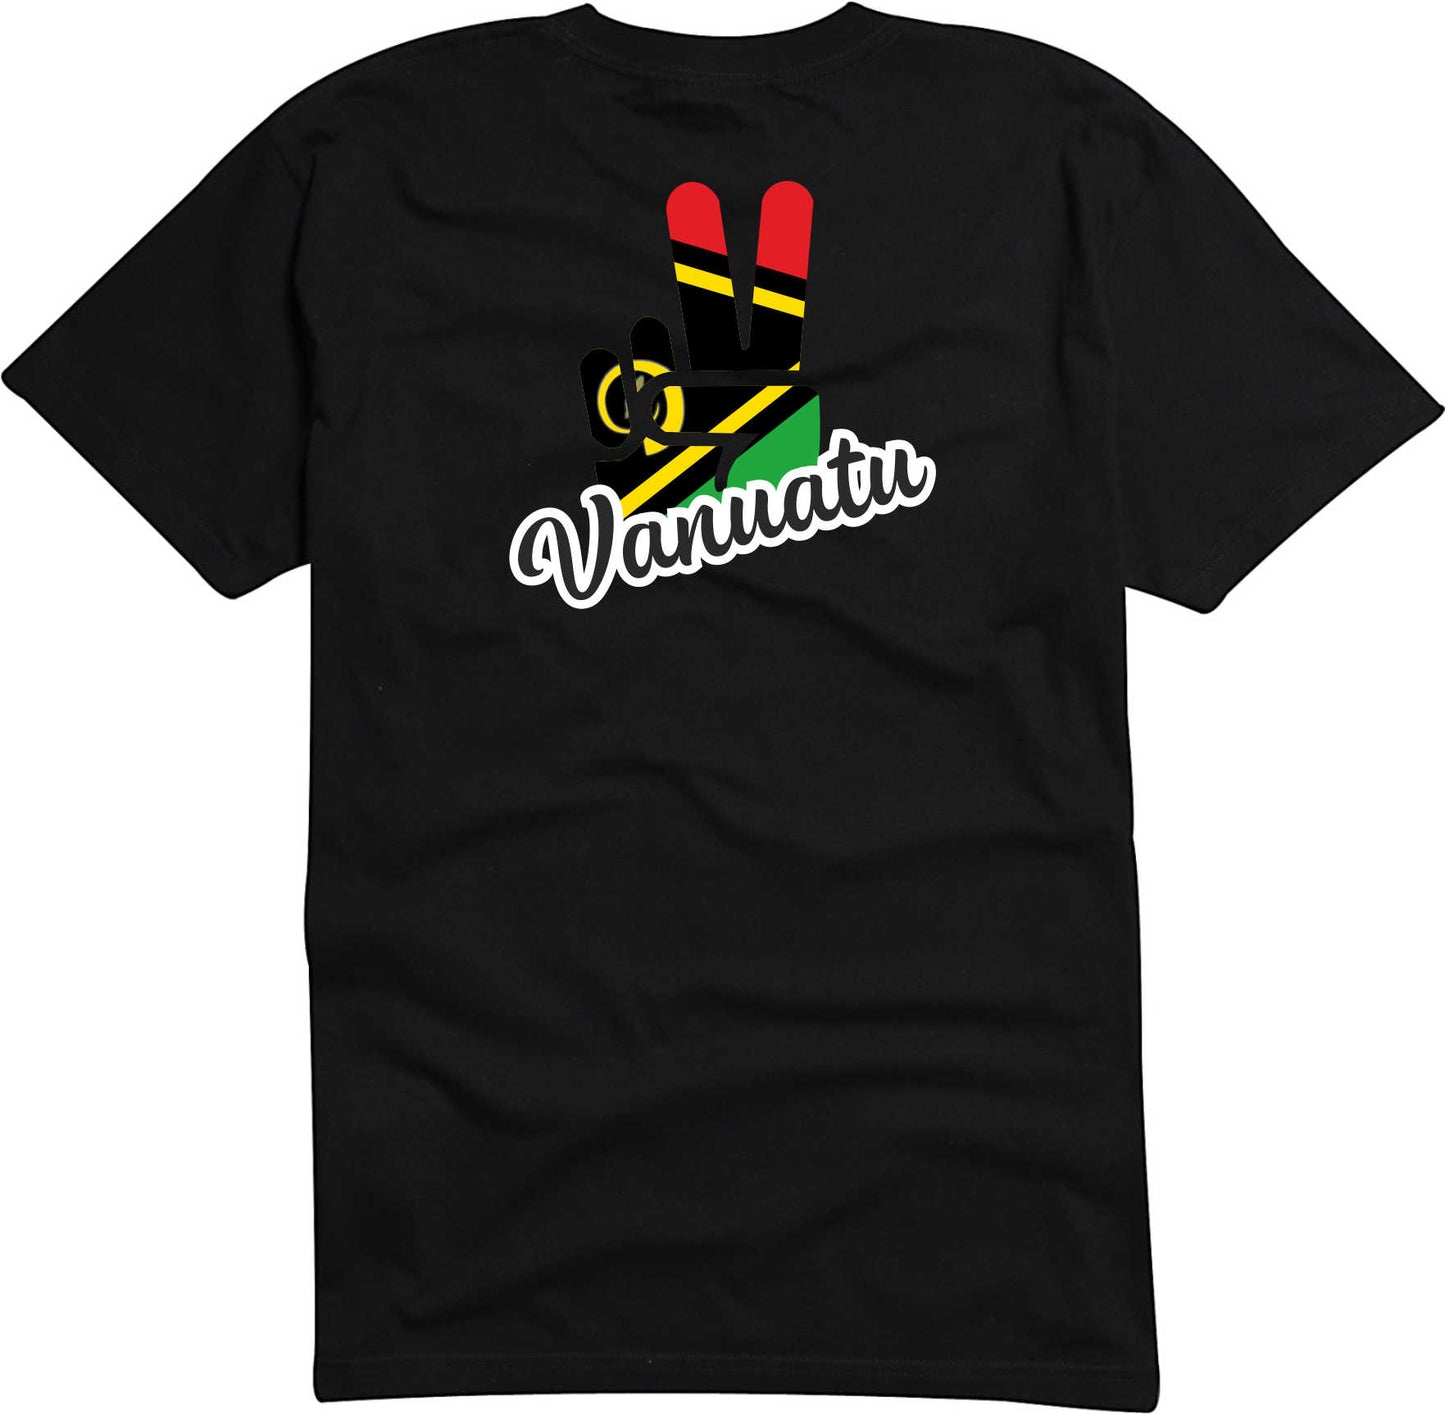 T-Shirt Herren - Victory - Flagge / Fahne - Vanuatu - Sieg